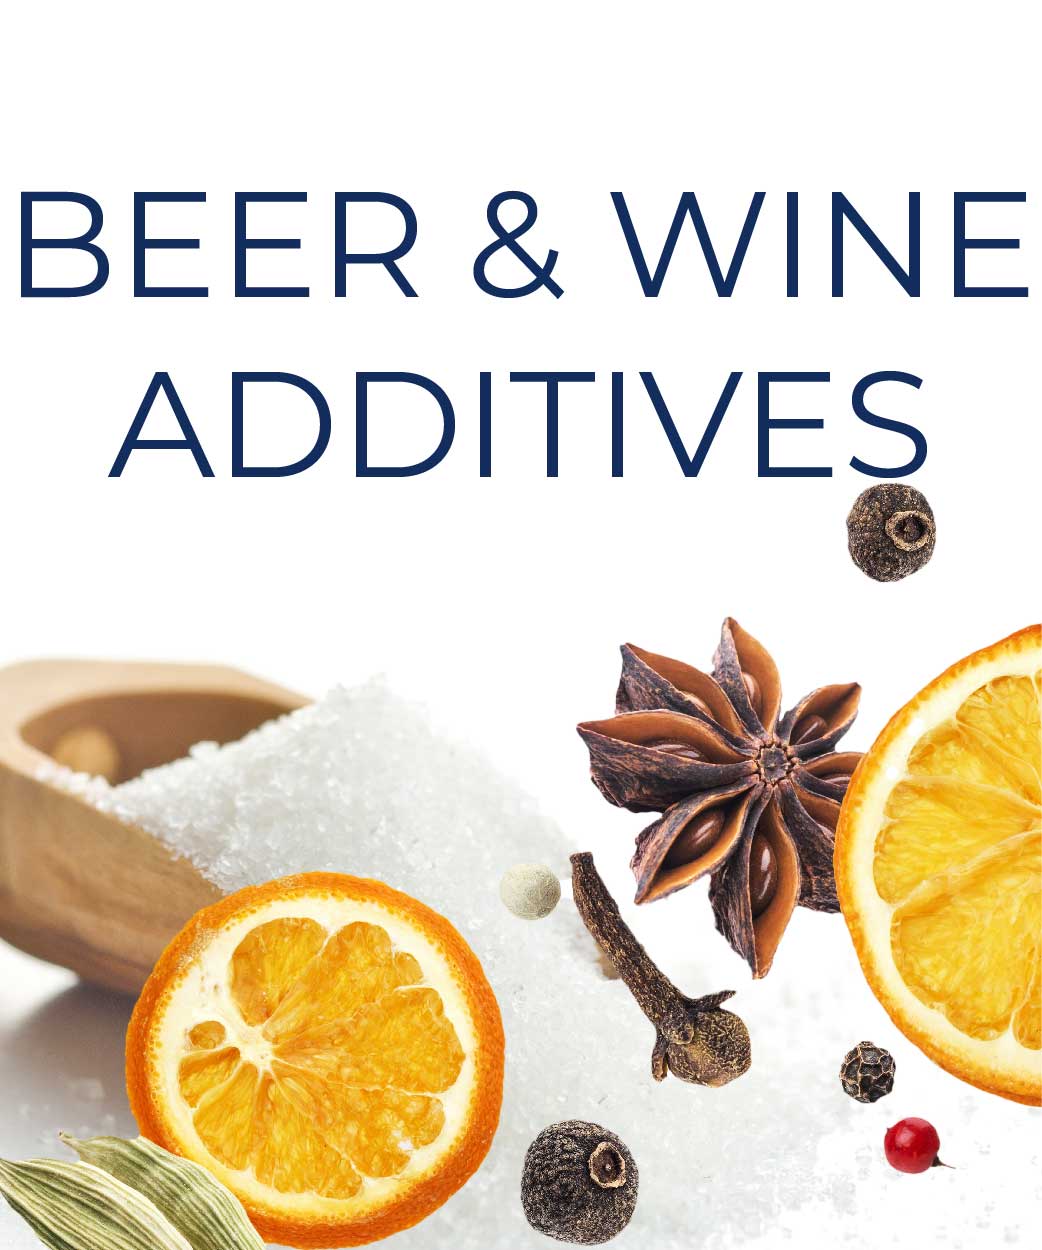 Beer & Wine Additives